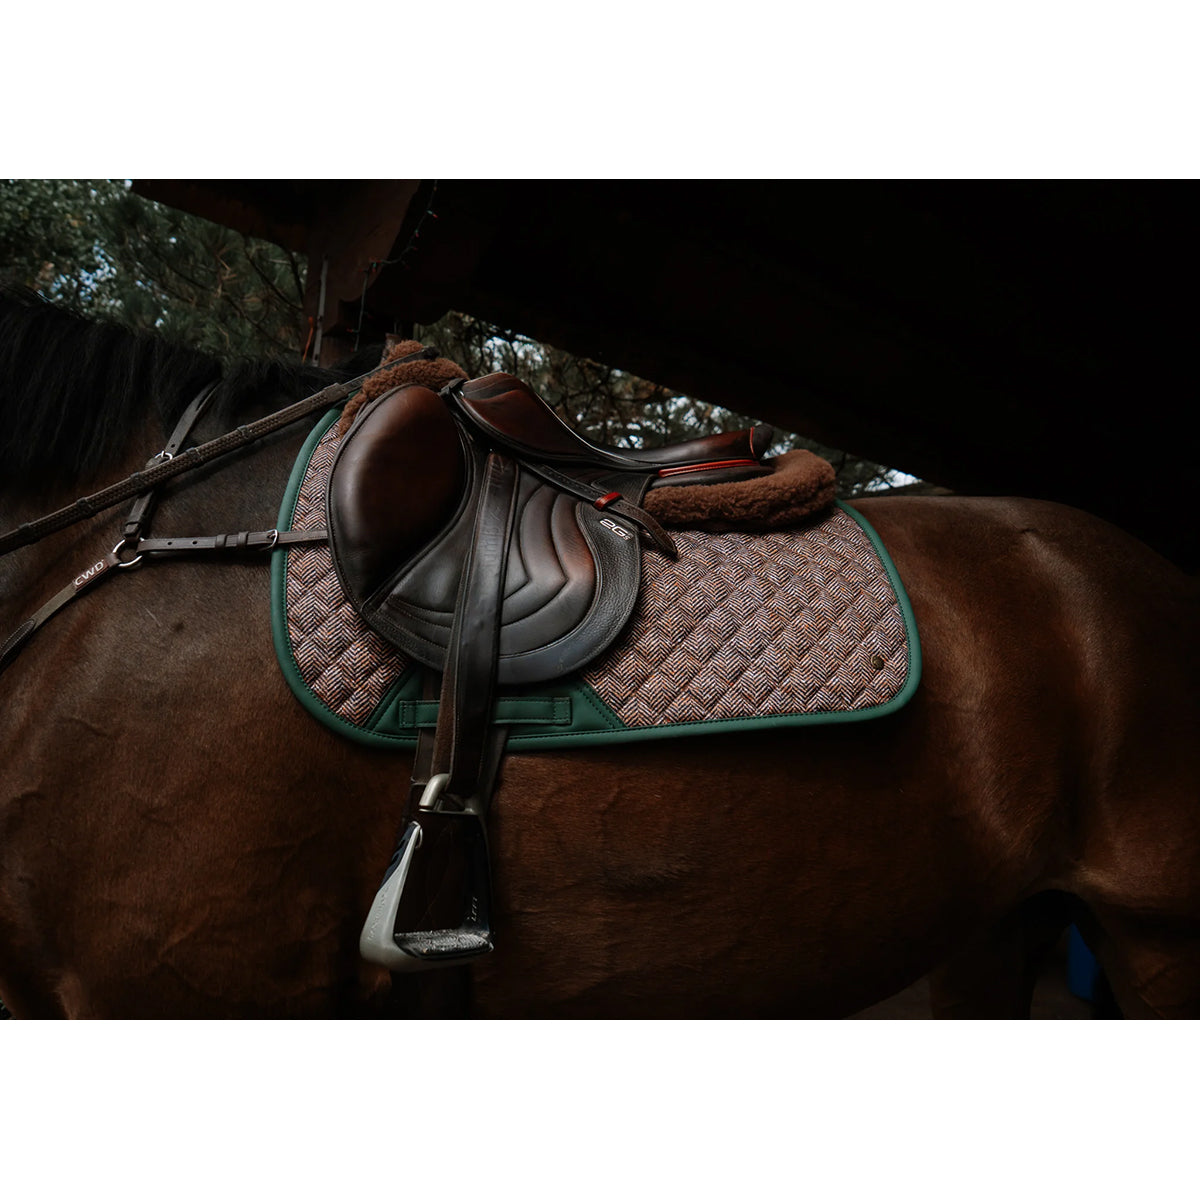 Gucci Horse Saddle & Tack Set - Brown Pet Accessories, Decor